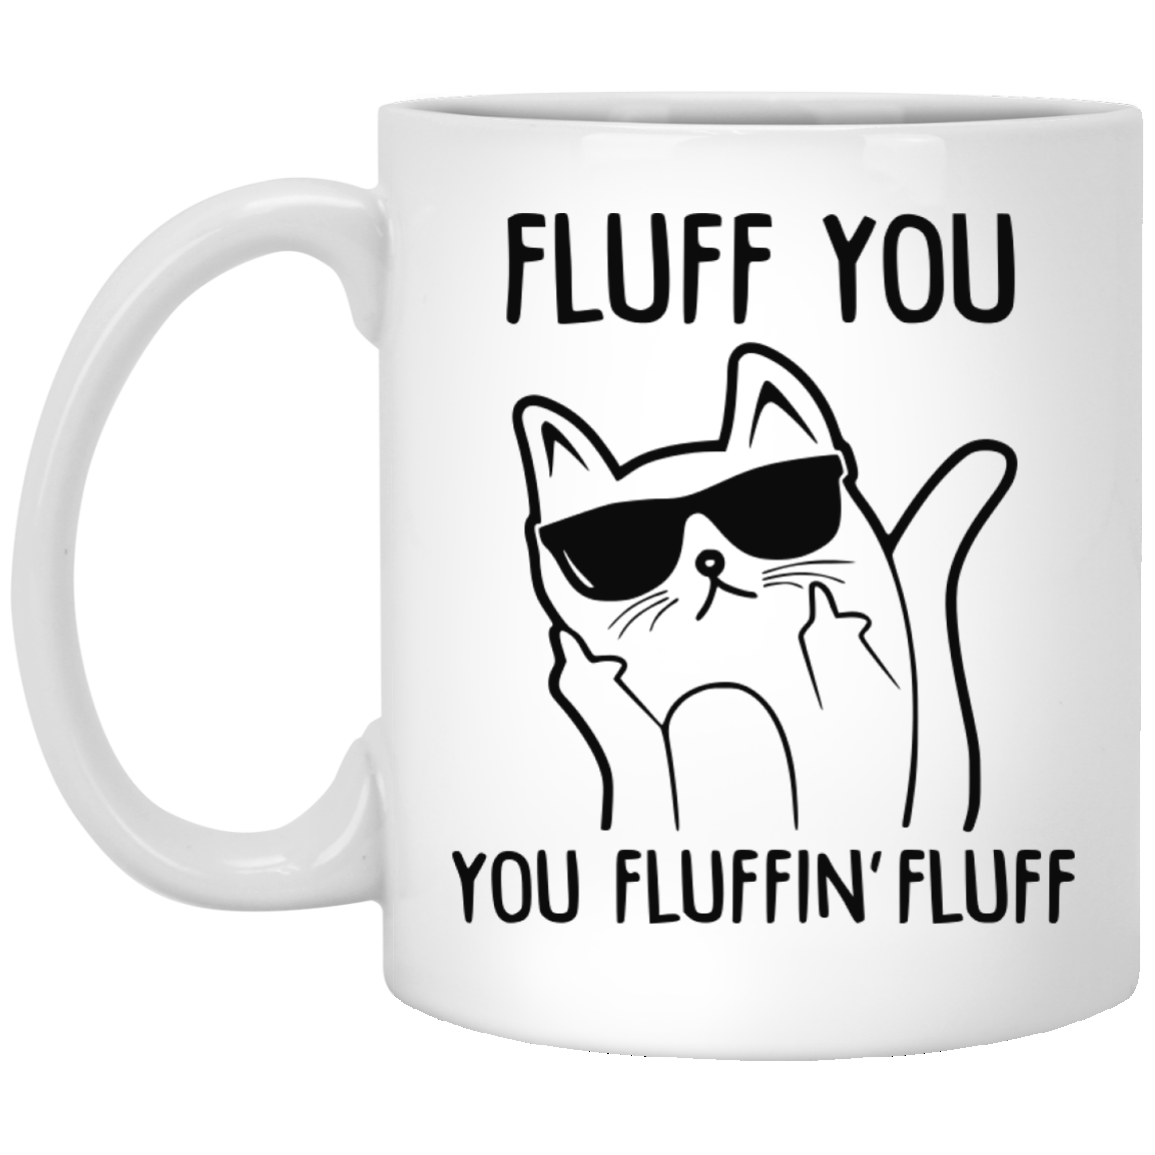 Fluff You you fluffin' fluff cat mug